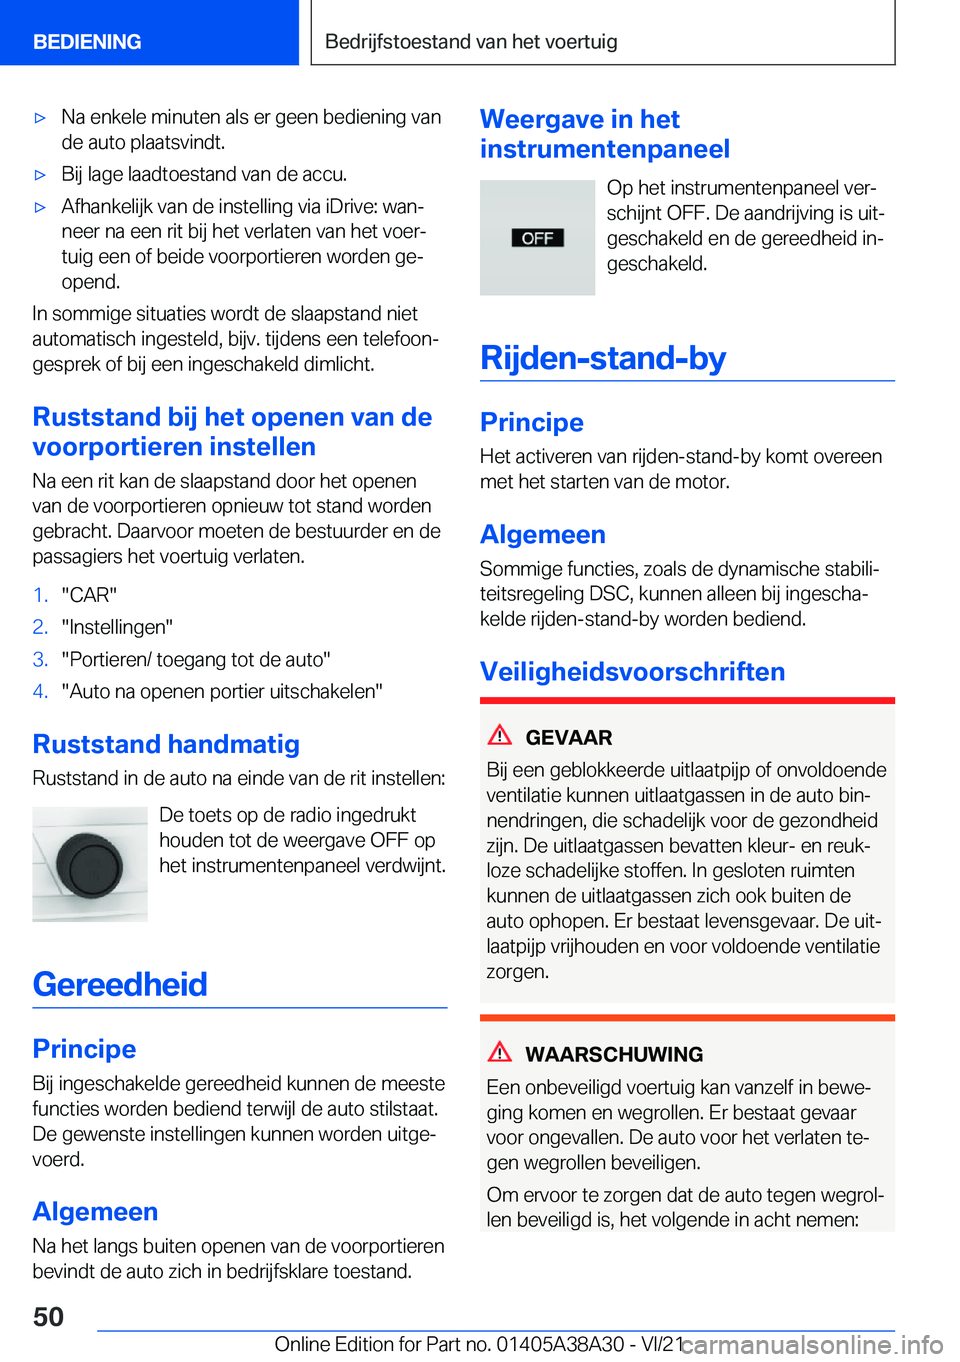 BMW 4 SERIES GRAN COUPE 2022  Instructieboekjes (in Dutch) 'x�N�a��e�n�k�e�l�e��m�i�n�u�t�e�n��a�l�s��e�r��g�e�e�n��b�e�d�i�e�n�i�n�g��v�a�n�d�e��a�u�t�o��p�l�a�a�t�s�v�i�n�d�t�.'x�B�i�j��l�a�g�e��l�a�a�d�t�o�e�s�t�a�n�d��v�a�n��d�e��a�c